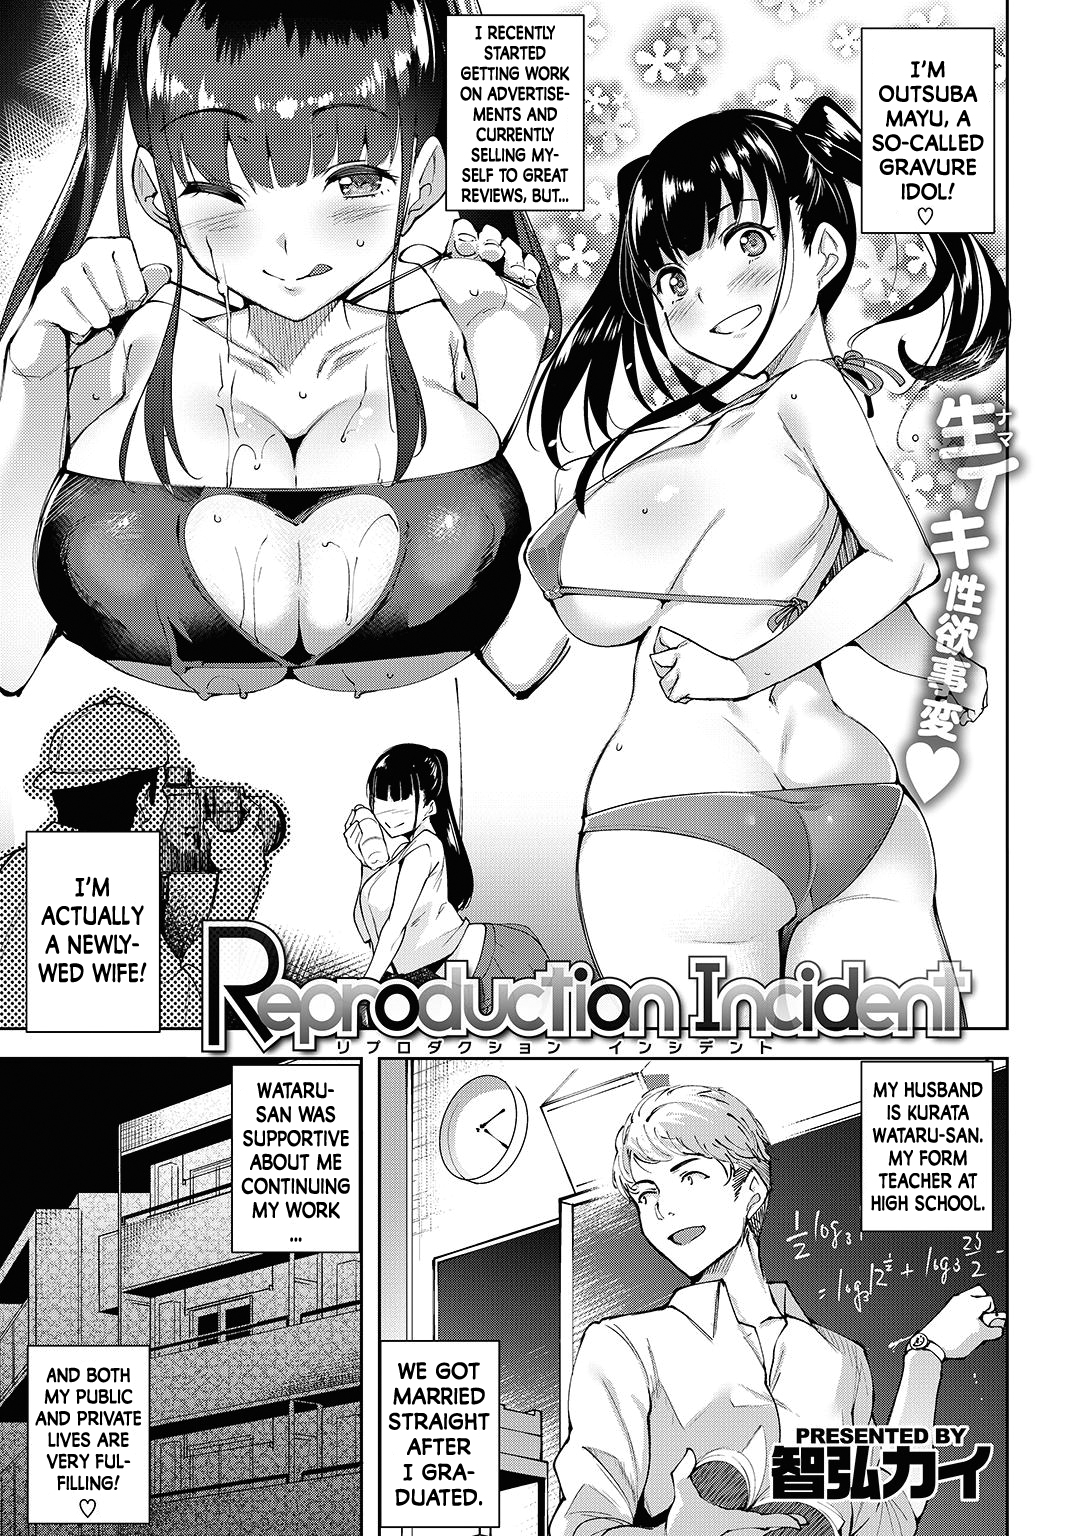 New manga from Tomohiro Kai - Reproduction Incident